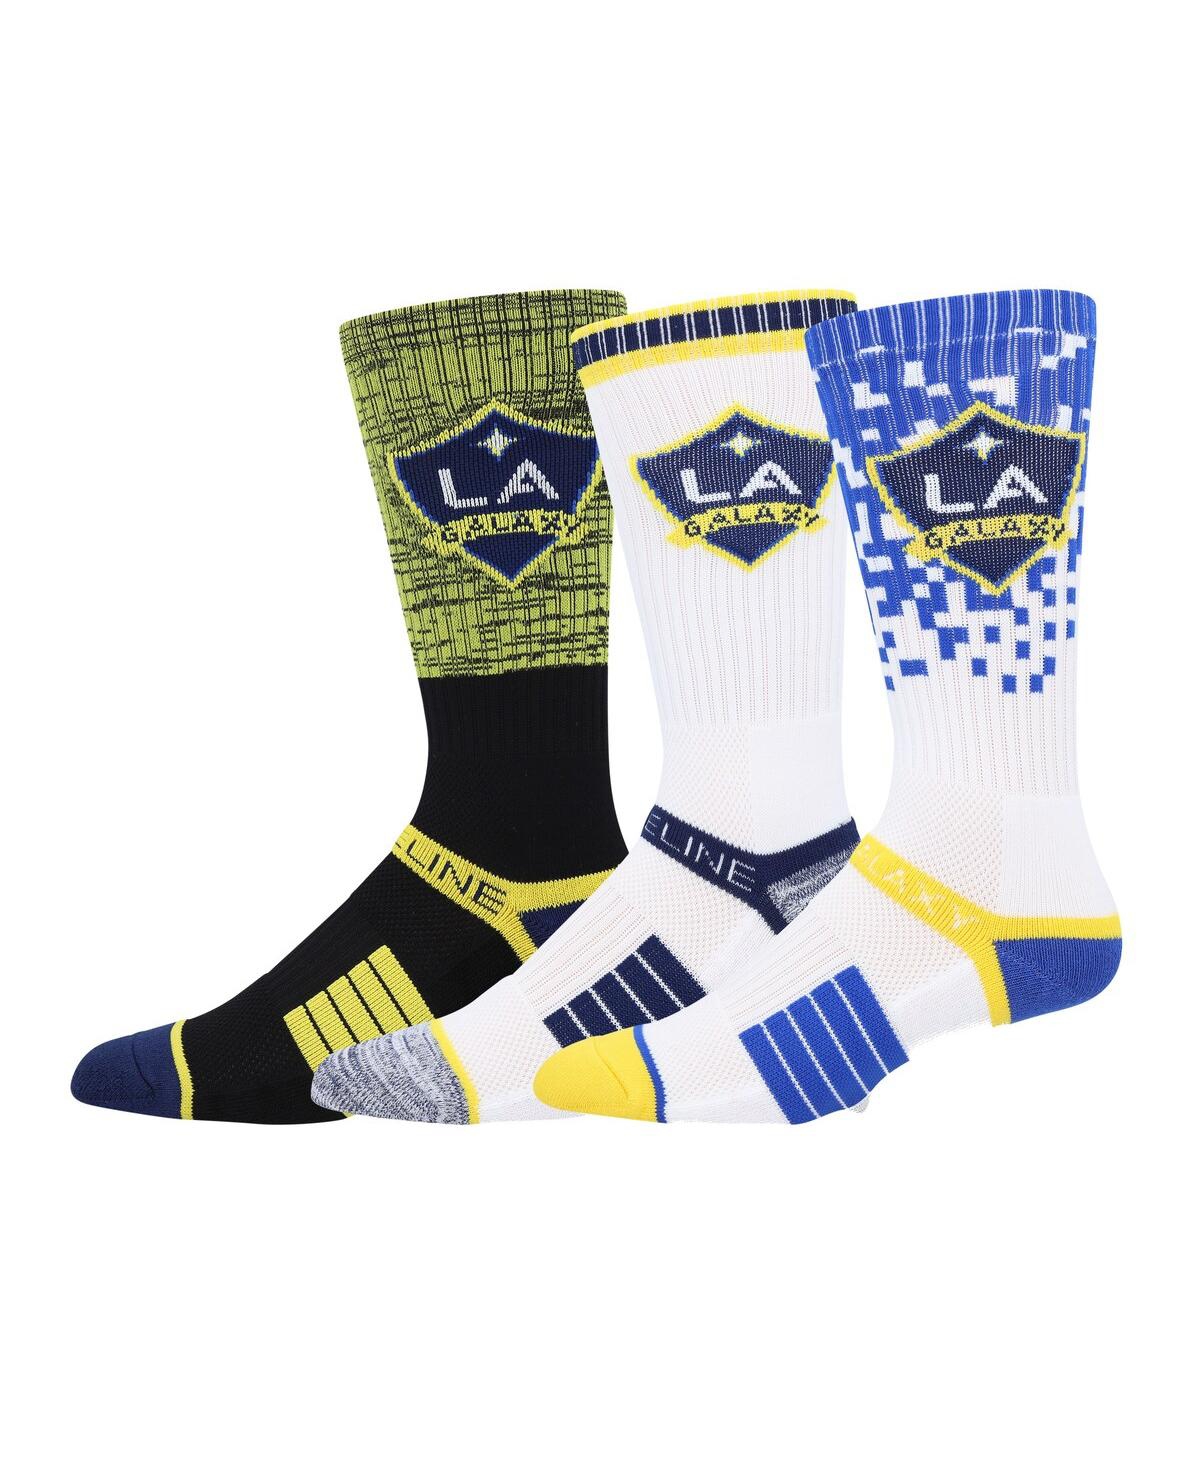 Men's Strideline La Galaxy Premium 3-Pack Knit Crew Socks Set - Multi